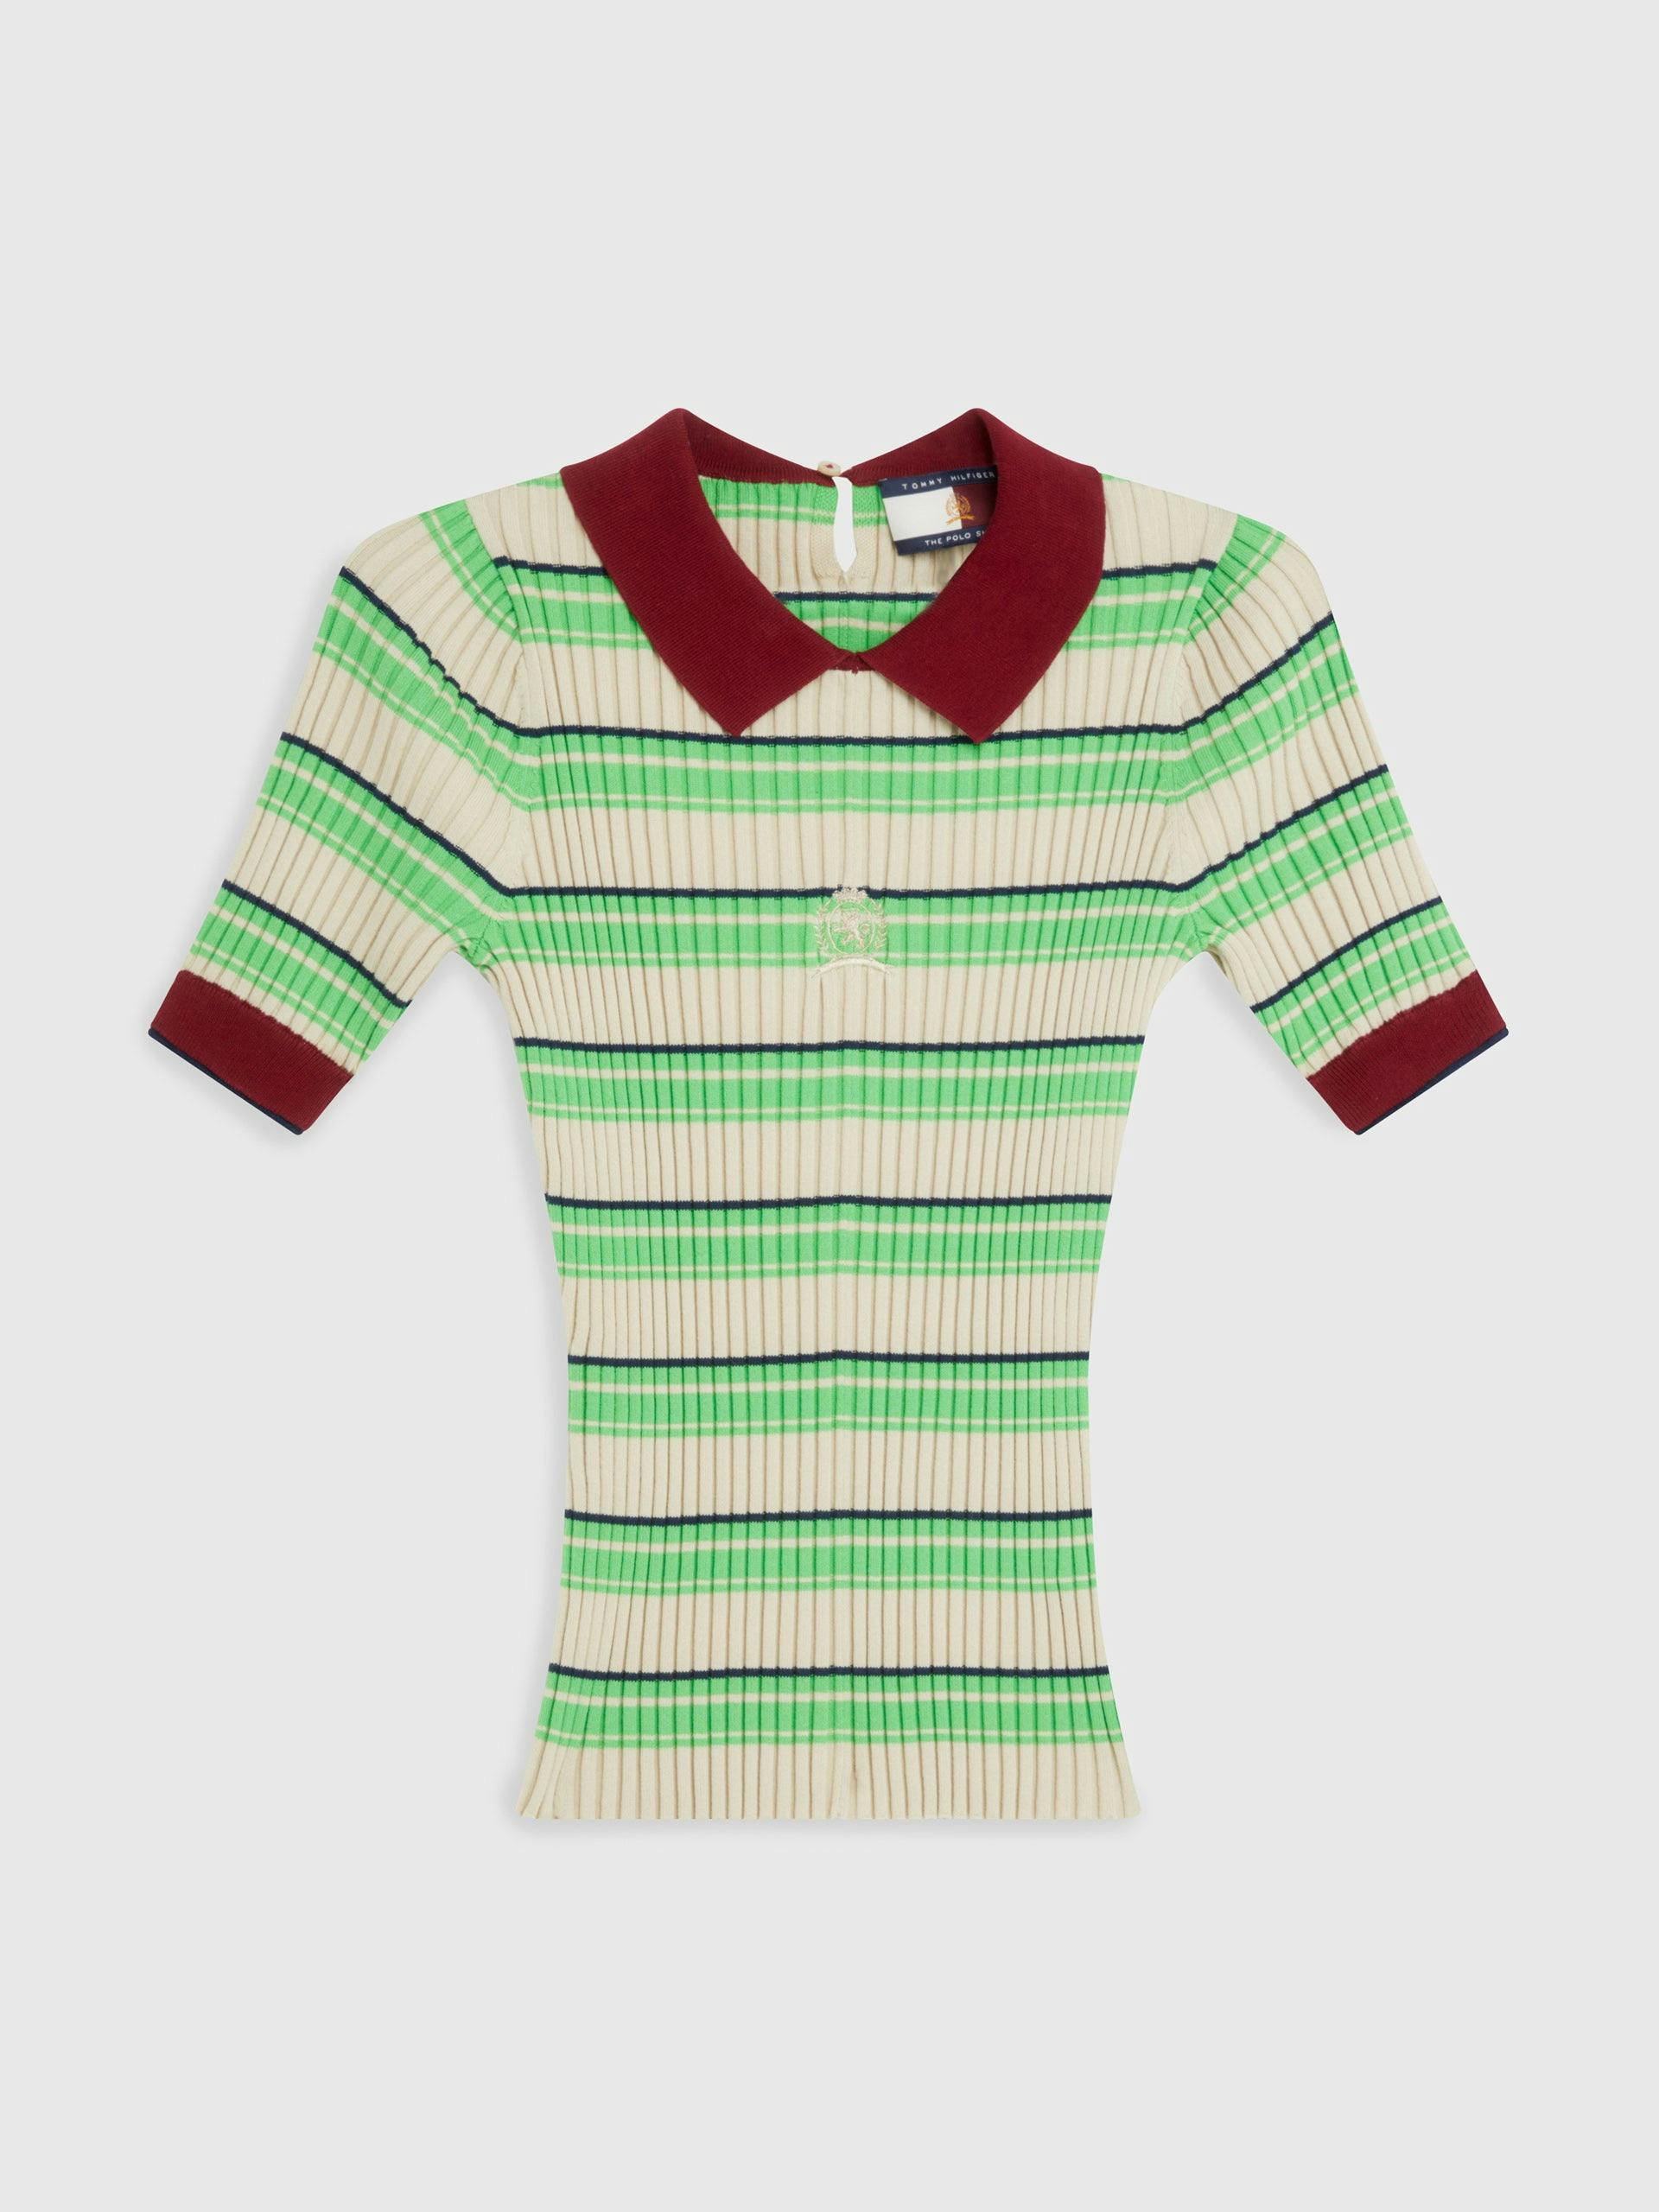 Striped polo knit top